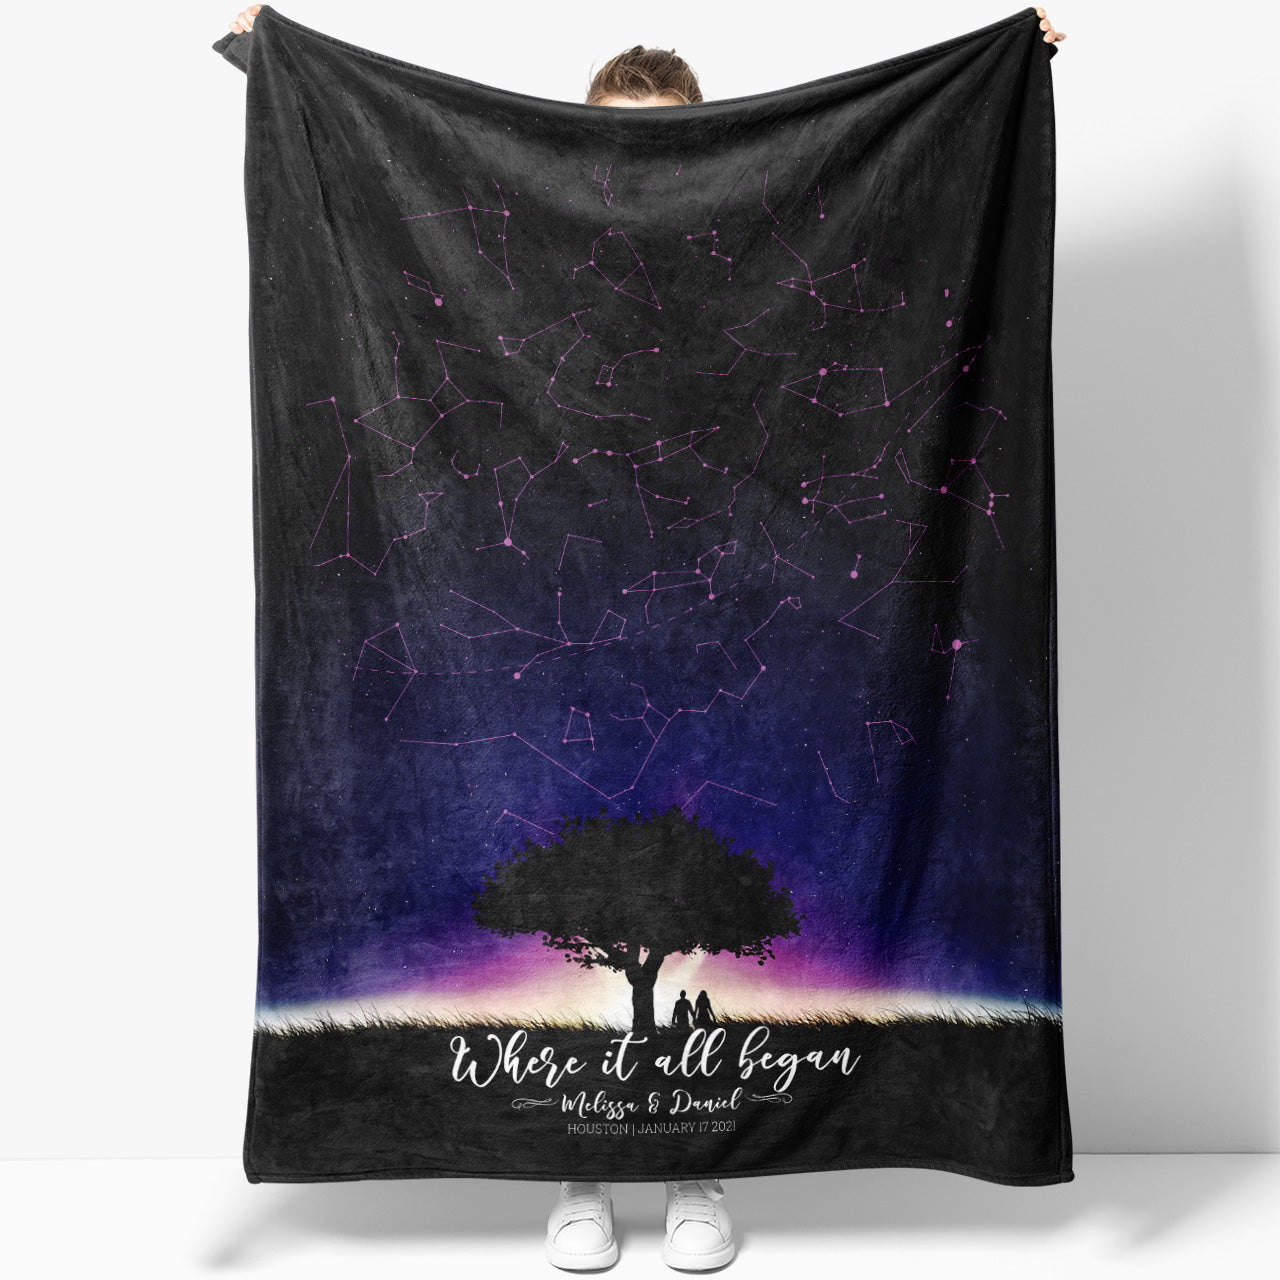 Blanket Gift Ideas For Him Her, Custom Personalized Star Night Sky Blanket Gift